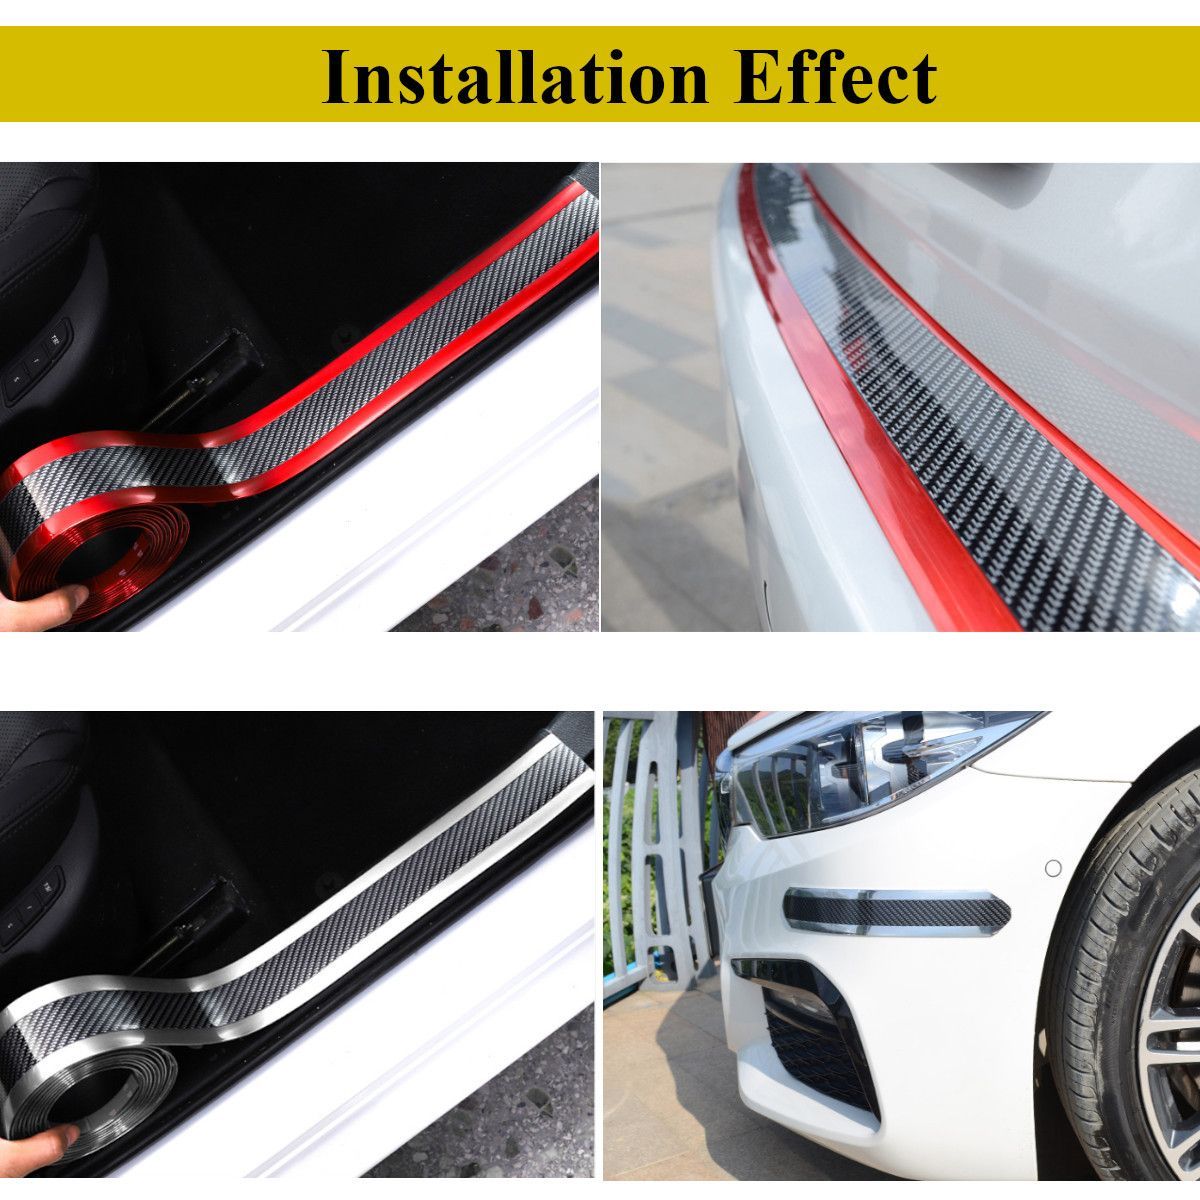 5-x-250cm7-x-250cm-Car-Carbon-Fiber-Rubber-Guard-Strip-Stickers-Door-Sill-Trim-Protector-1599530